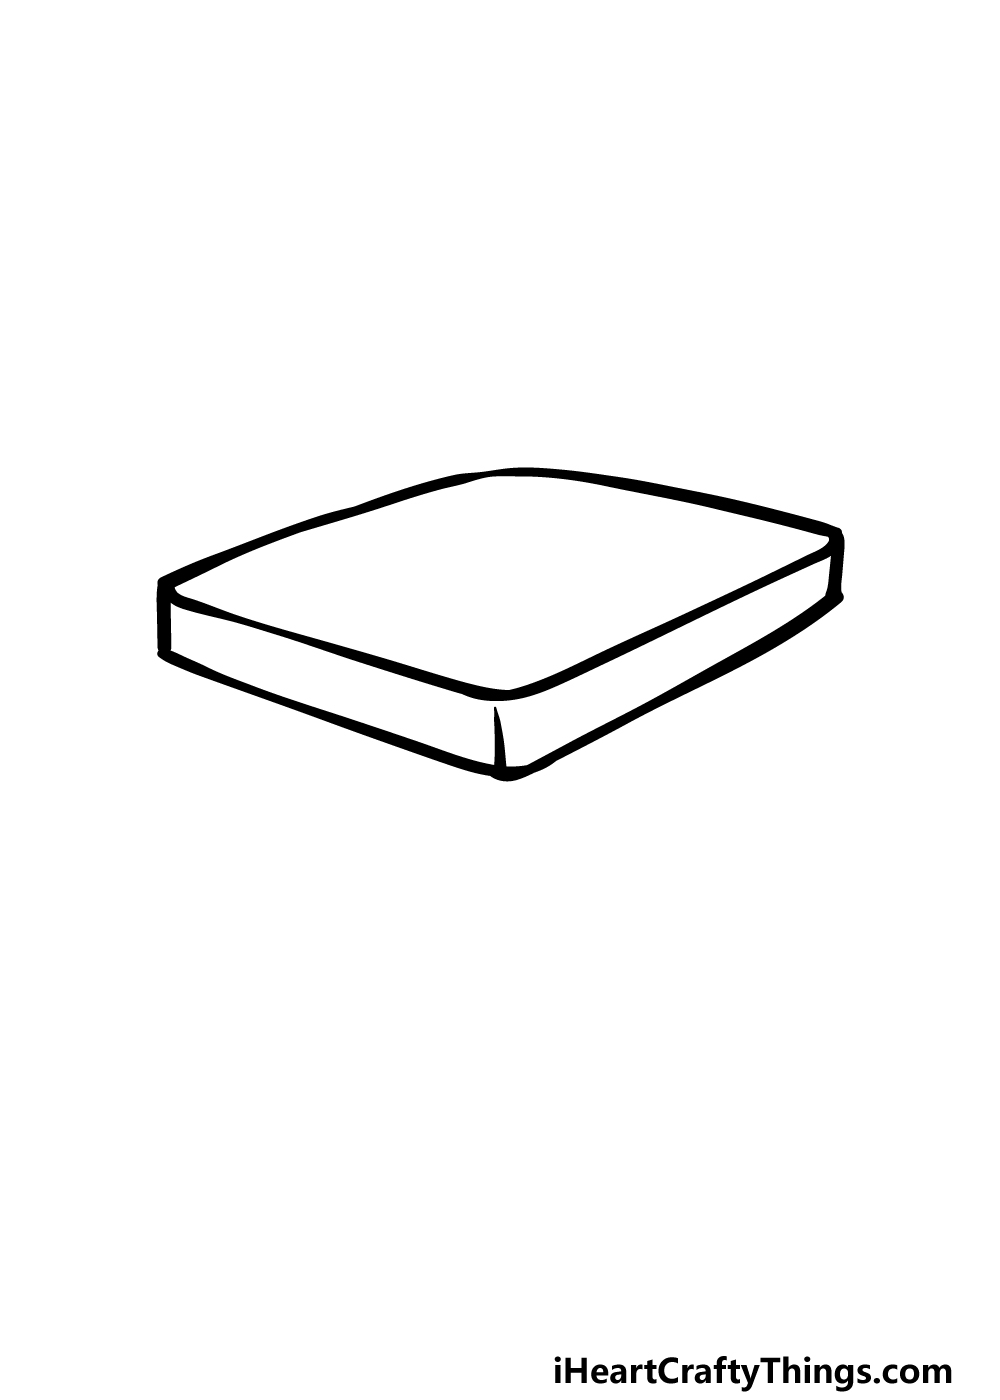 how to draw a Sandwich step 1